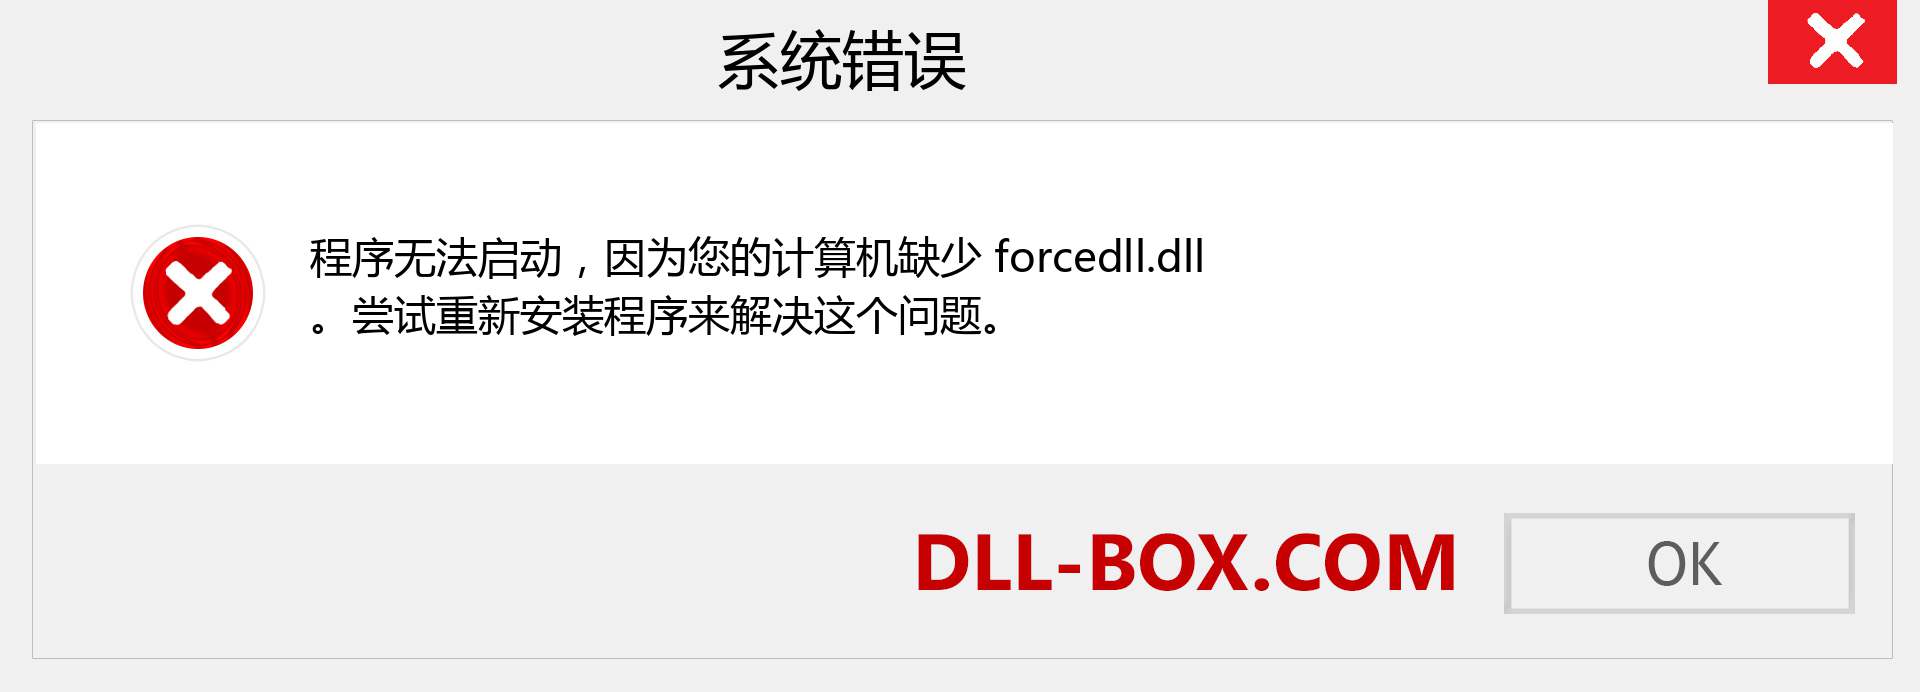 forcedll.dll 文件丢失？。 适用于 Windows 7、8、10 的下载 - 修复 Windows、照片、图像上的 forcedll dll 丢失错误